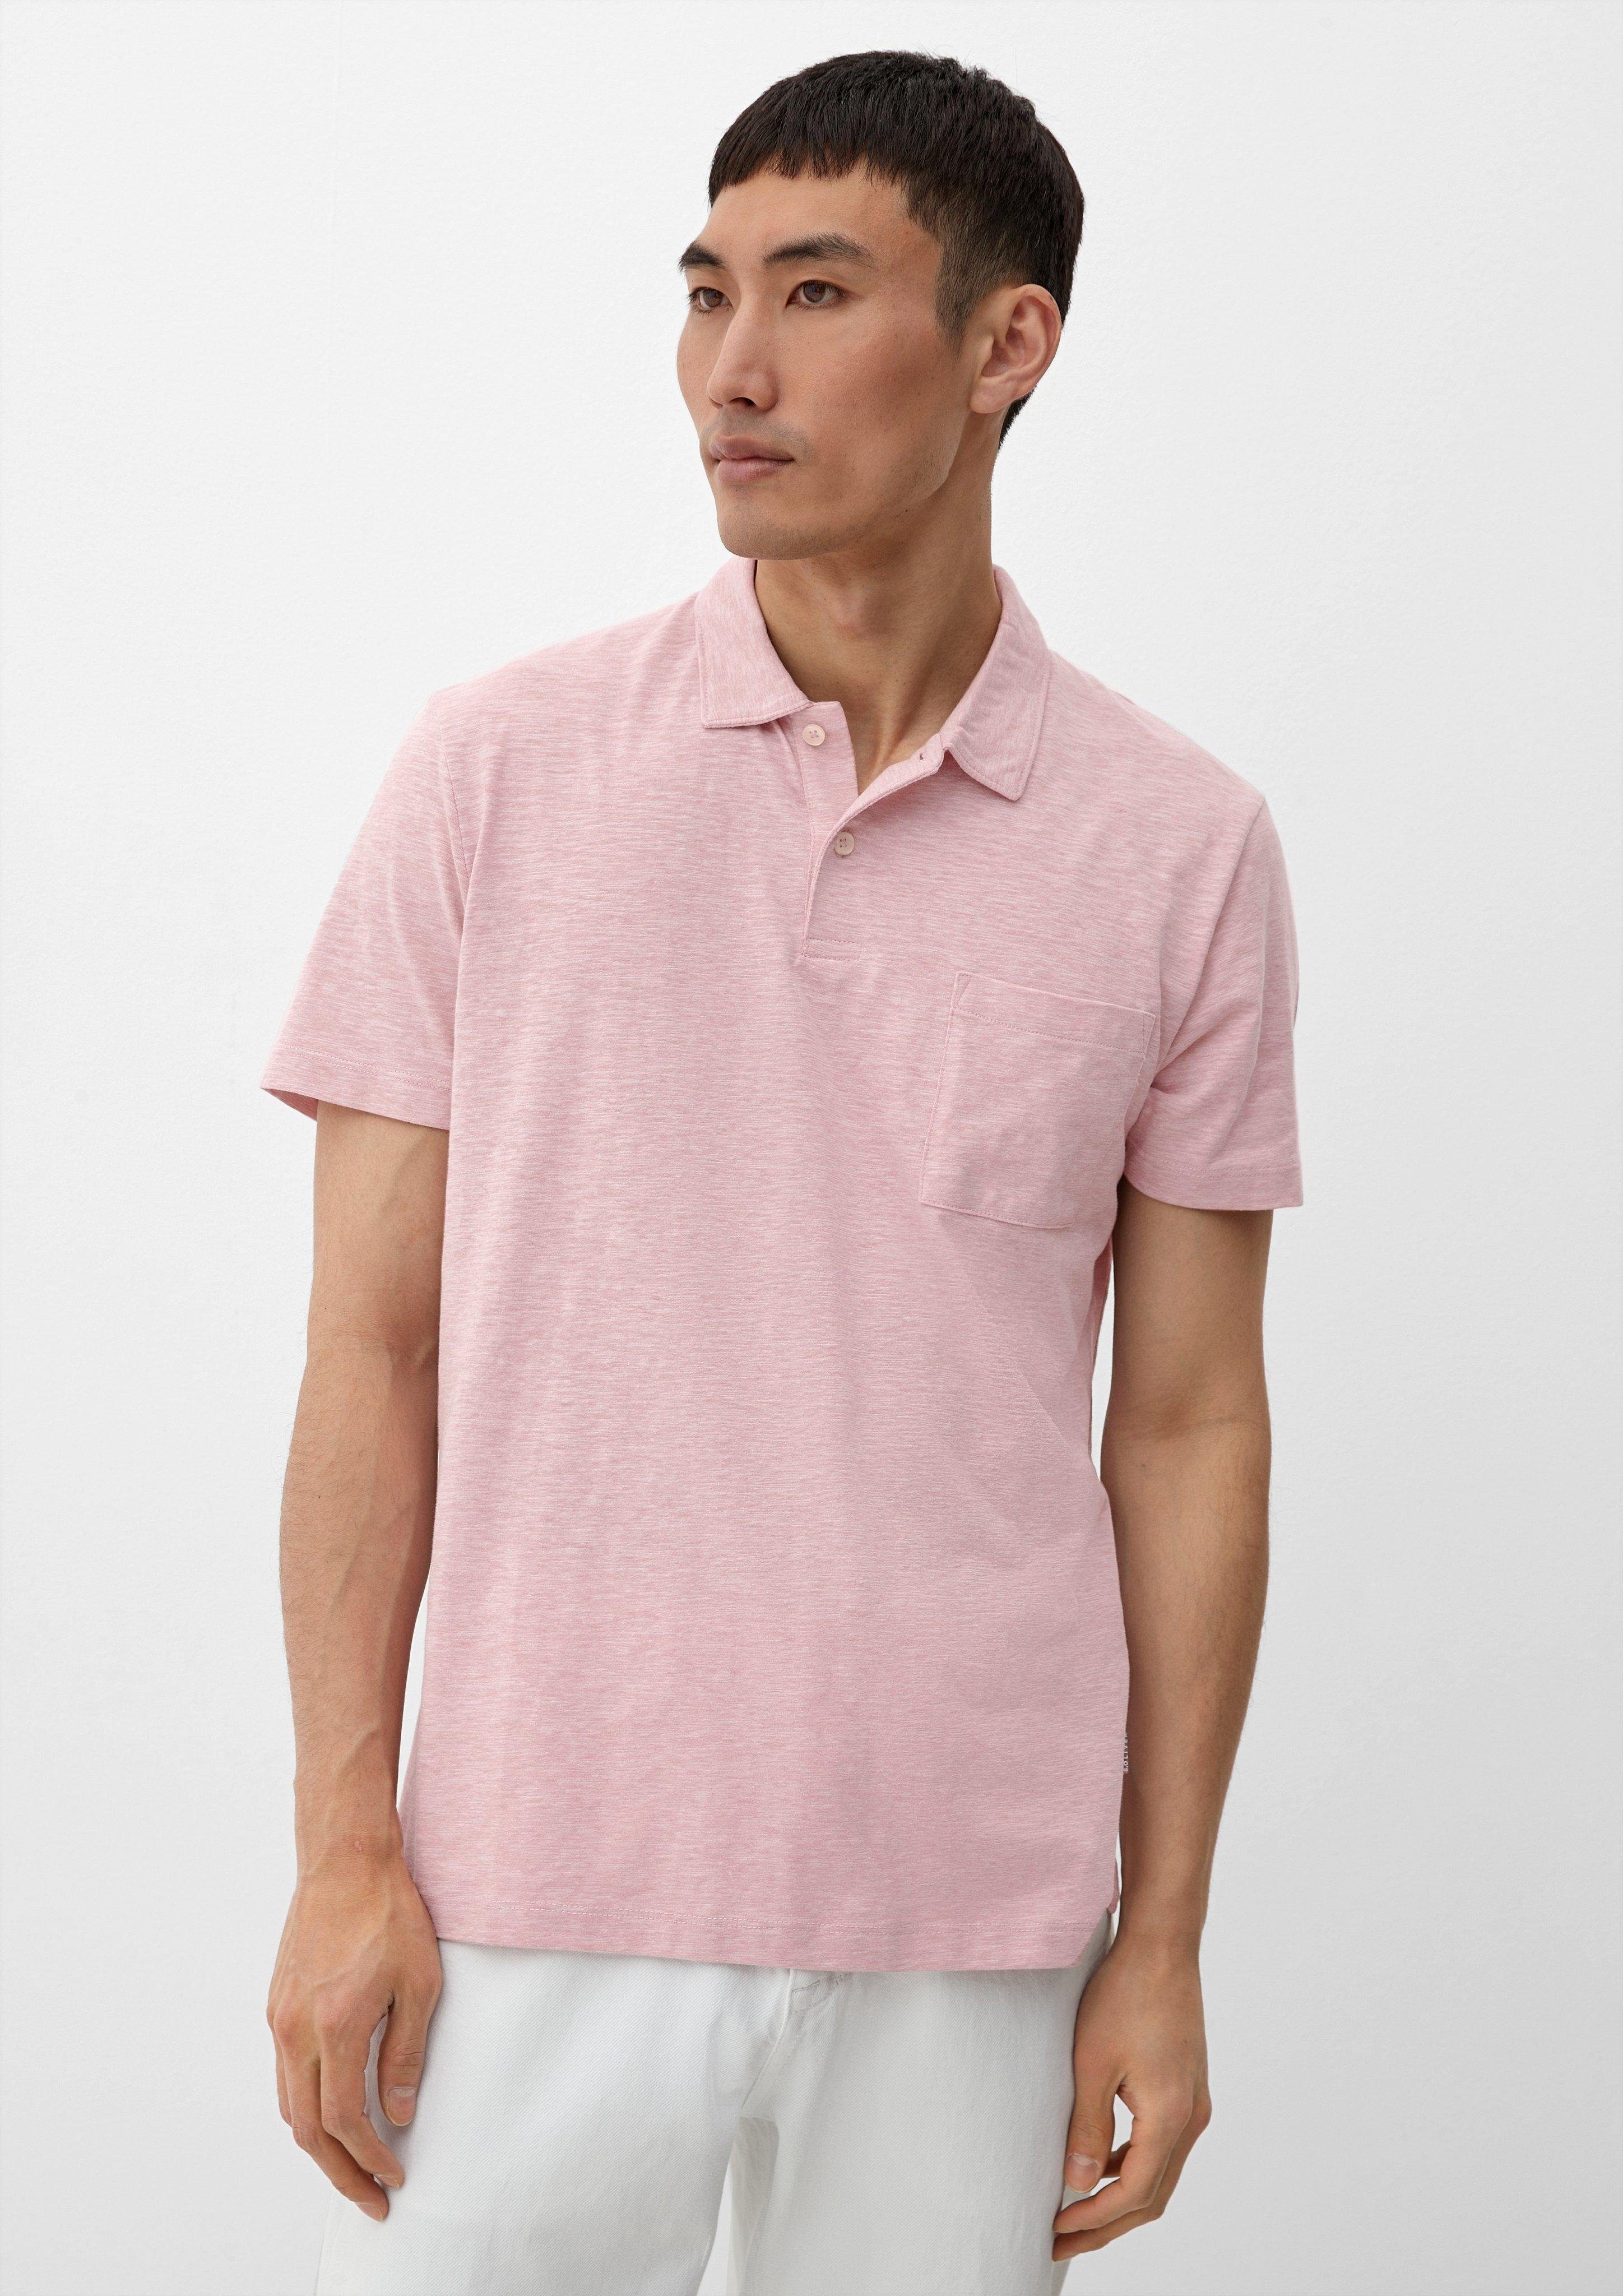 s.Oliver Kurzarmshirt Poloshirt mit Flammgarnstruktur Blende rosa